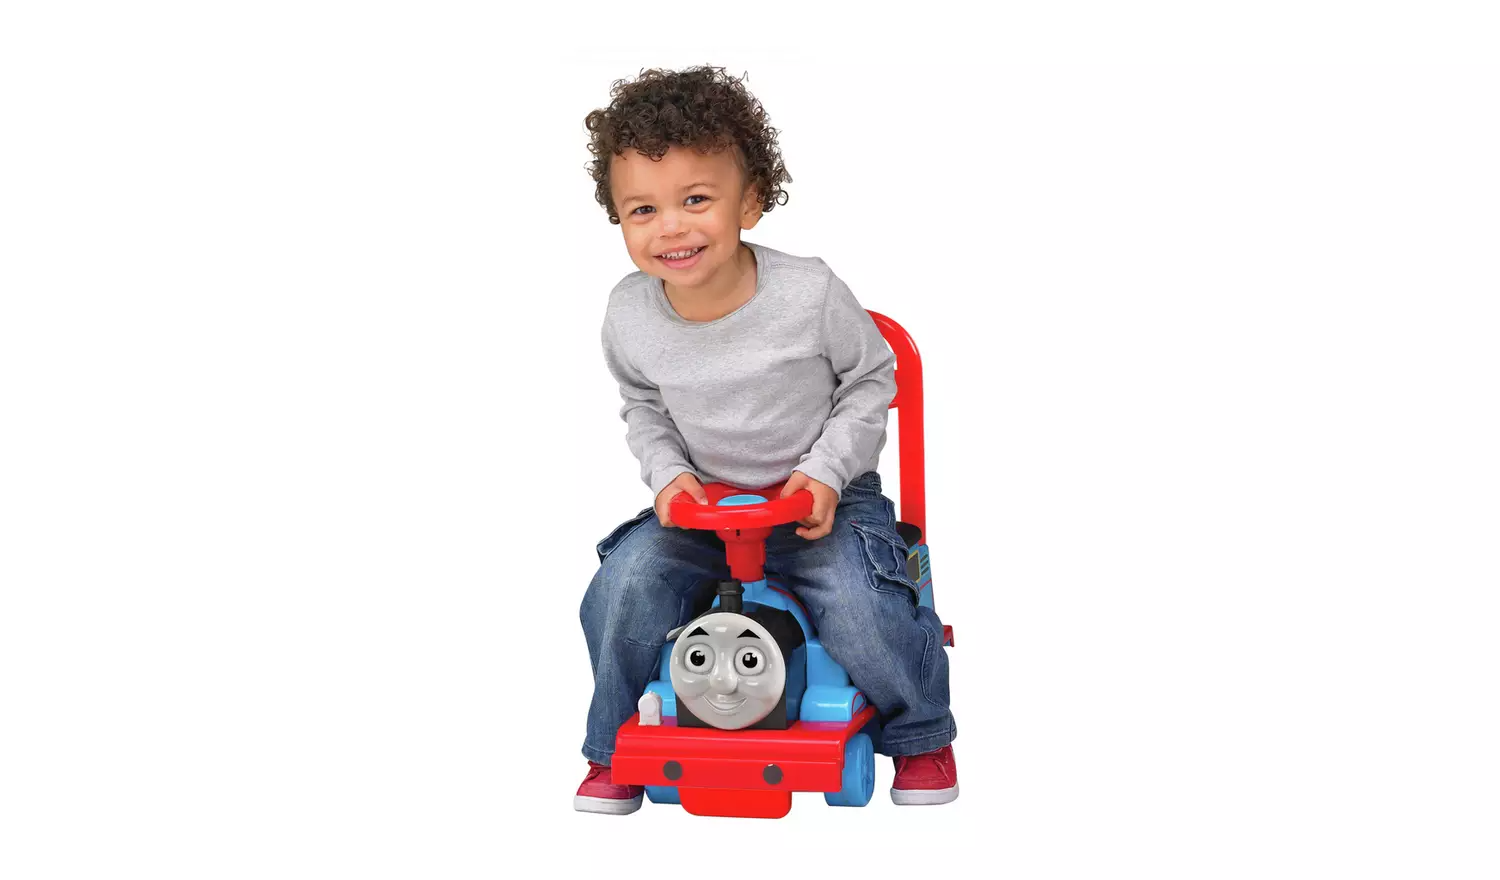 Thomas & Friends Engine Ride On